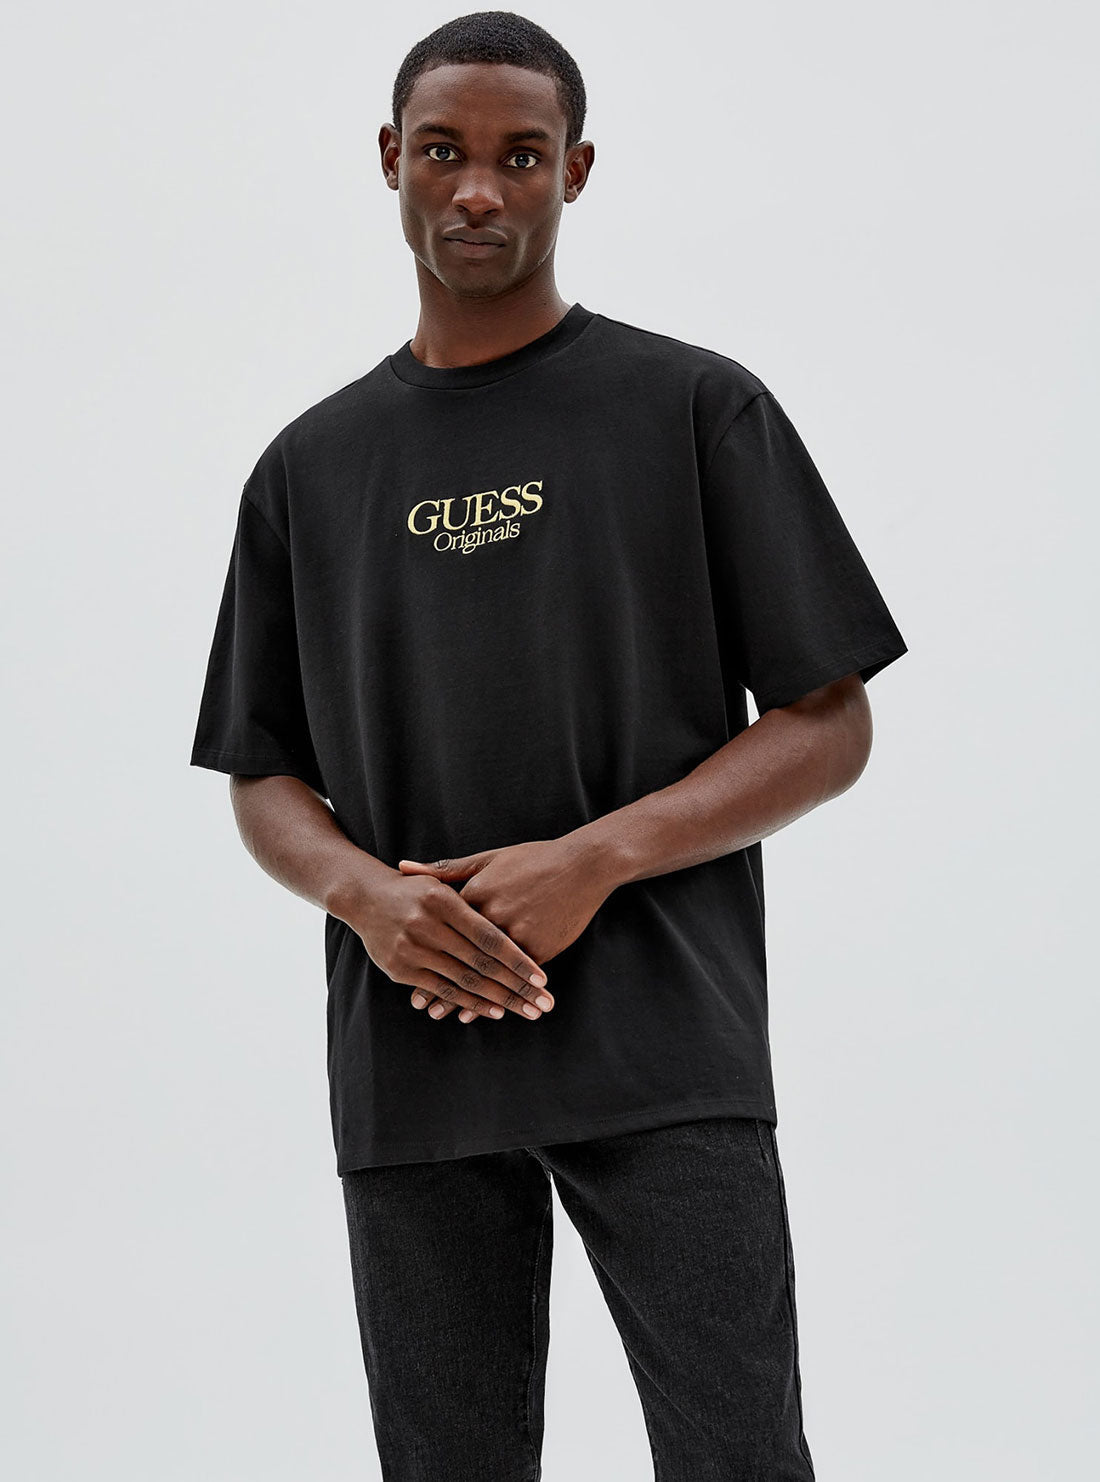 GUESS Mens GUESS Originals Black Austin Logo T-Shirt M2GI00K9XF2 Front View